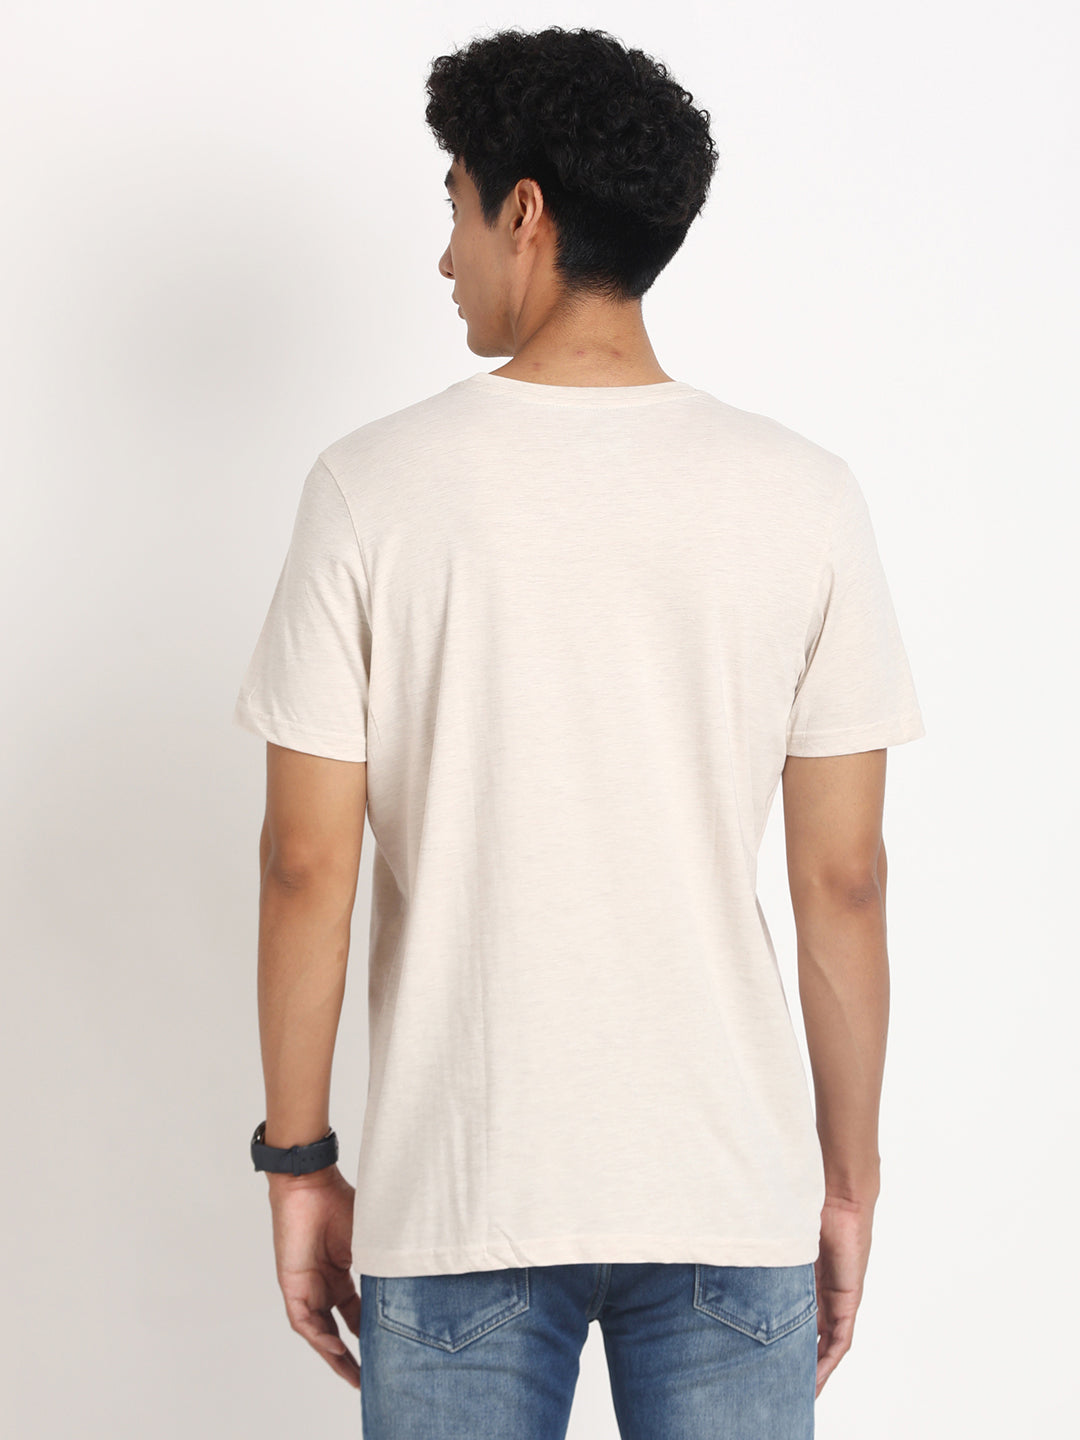 Essential 100% Cotton Cream Chest Printed Round Neck Half Sleeve Casual T-Shirt